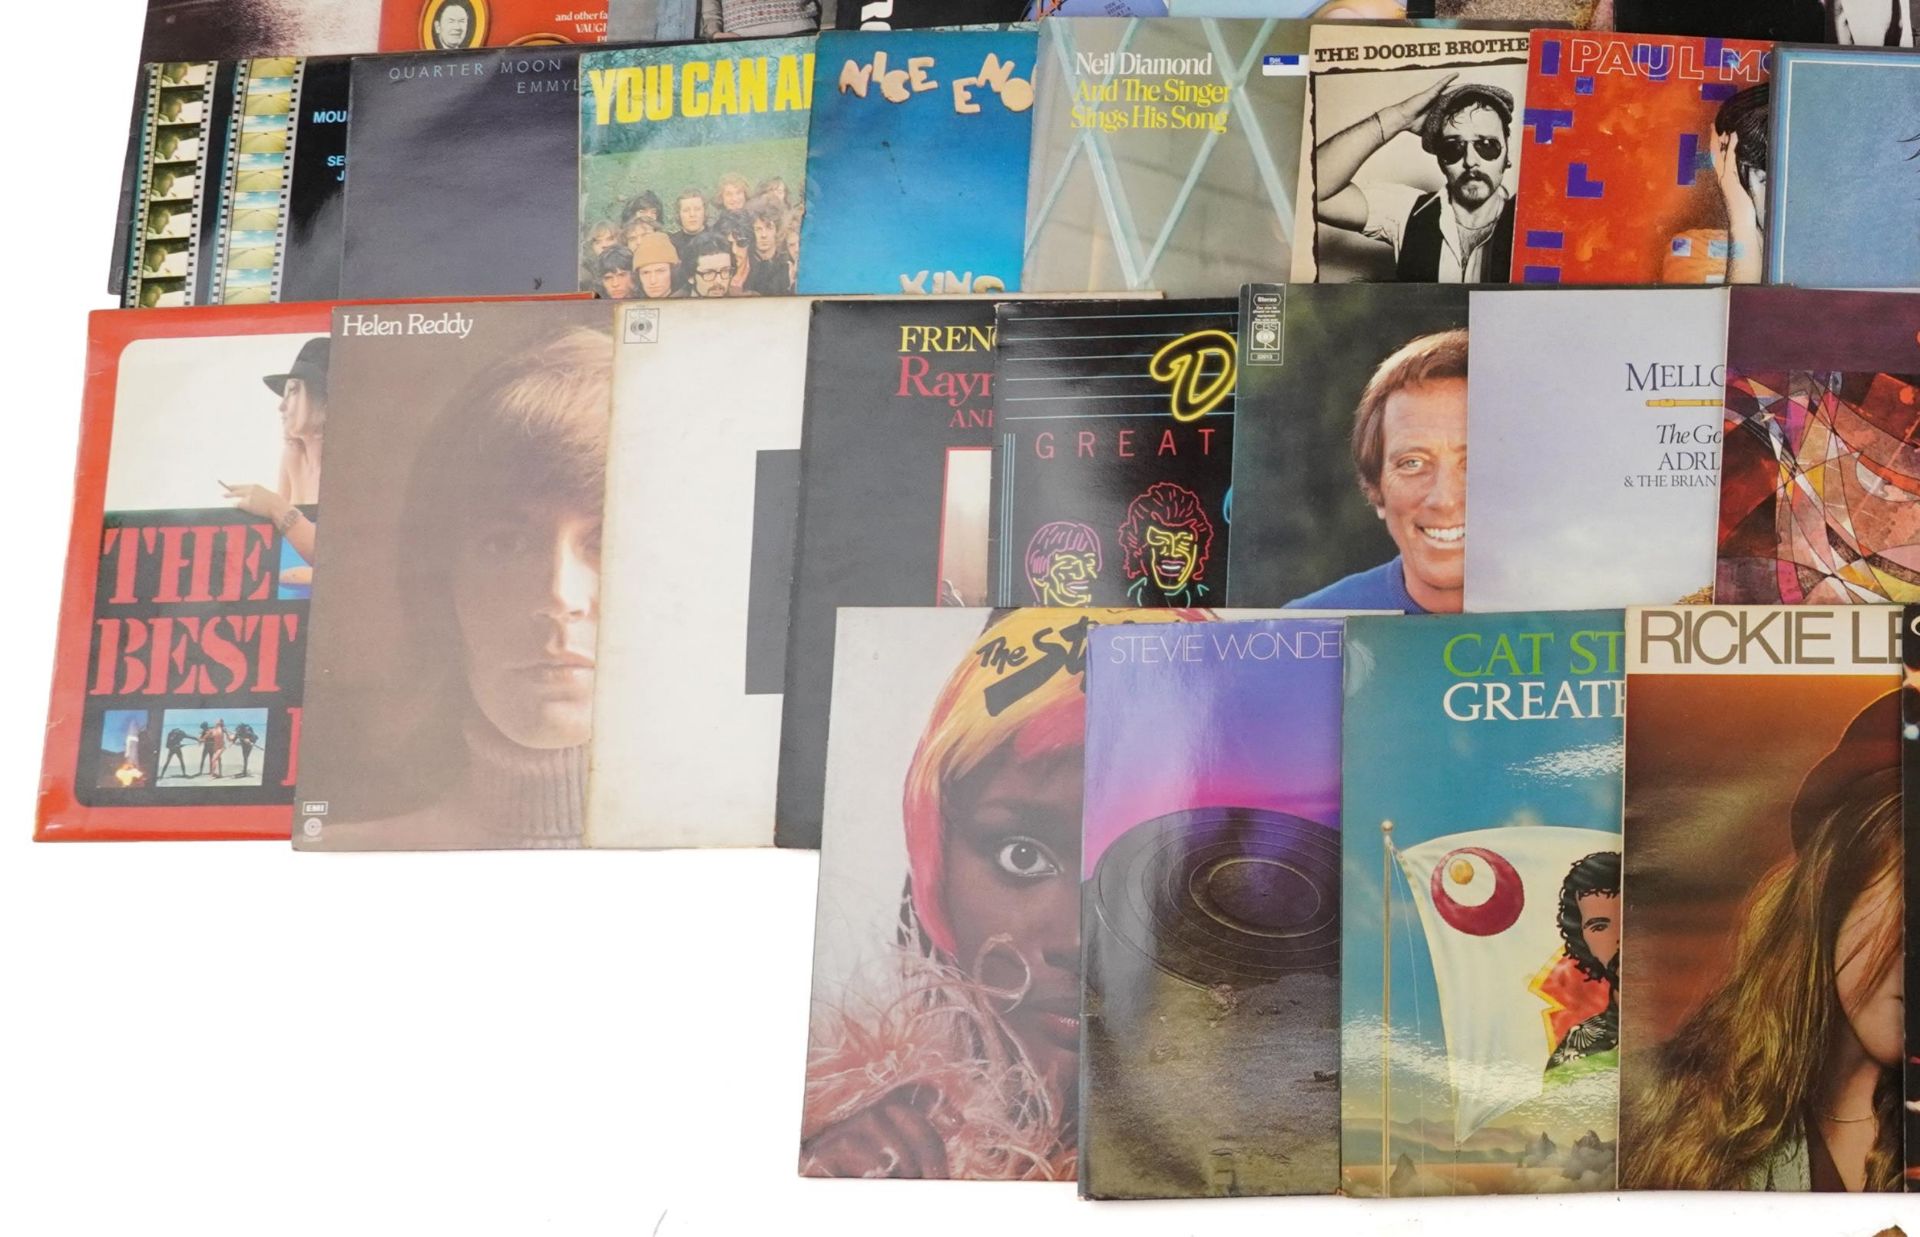 Vinyl LP records including The Eagles, Paul McCartney, The Doobie Brothers, David Bowie, Elton John, - Image 4 of 5